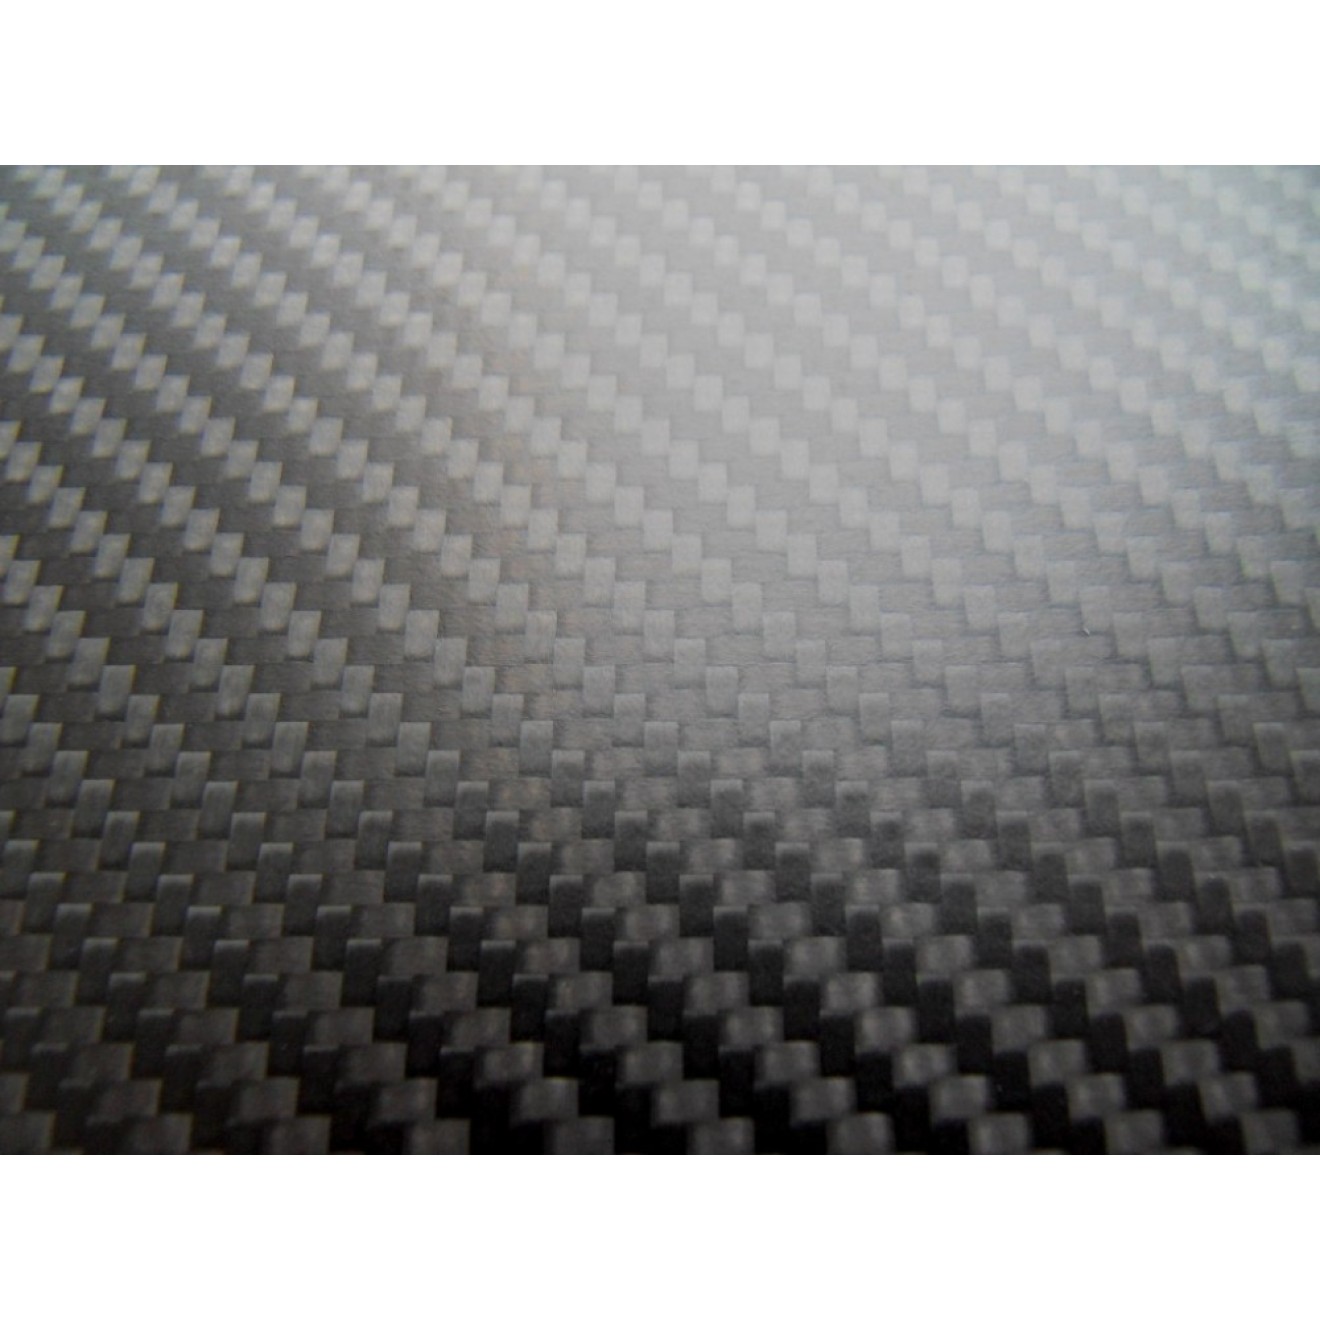 Xellentic® CF 600x480mm, surface matt finish